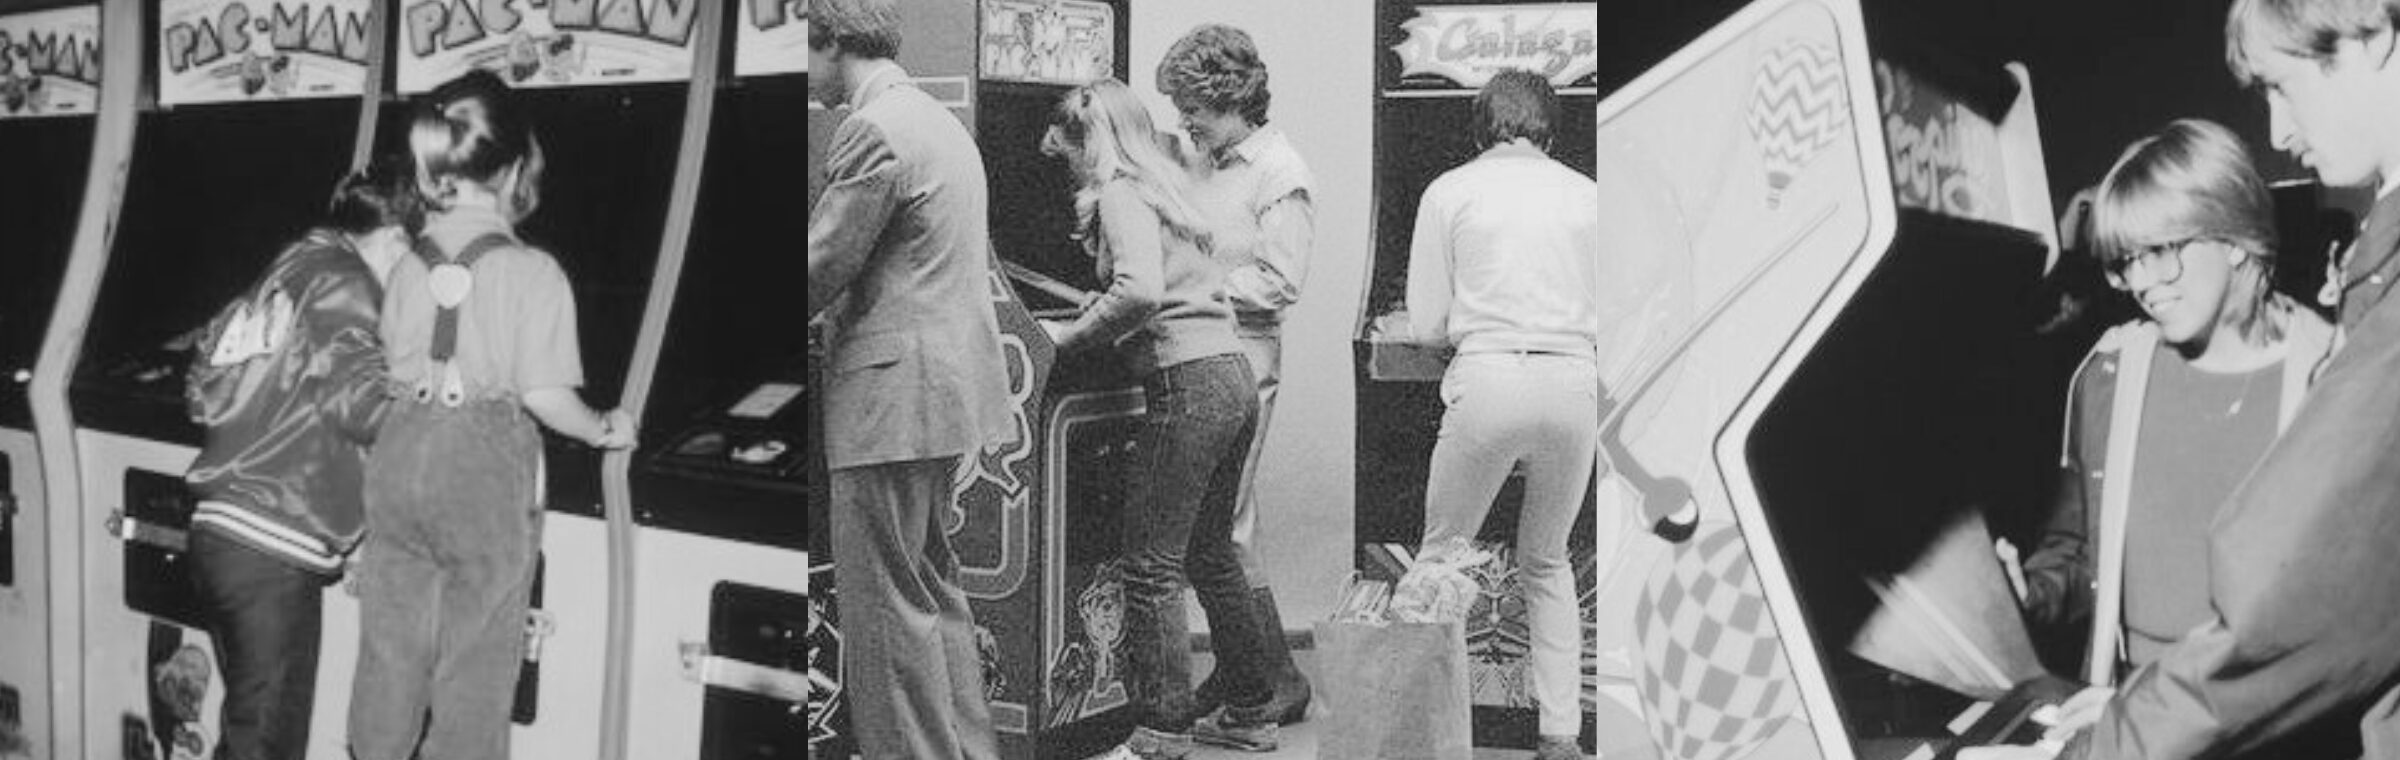 Retro arcade hall collage